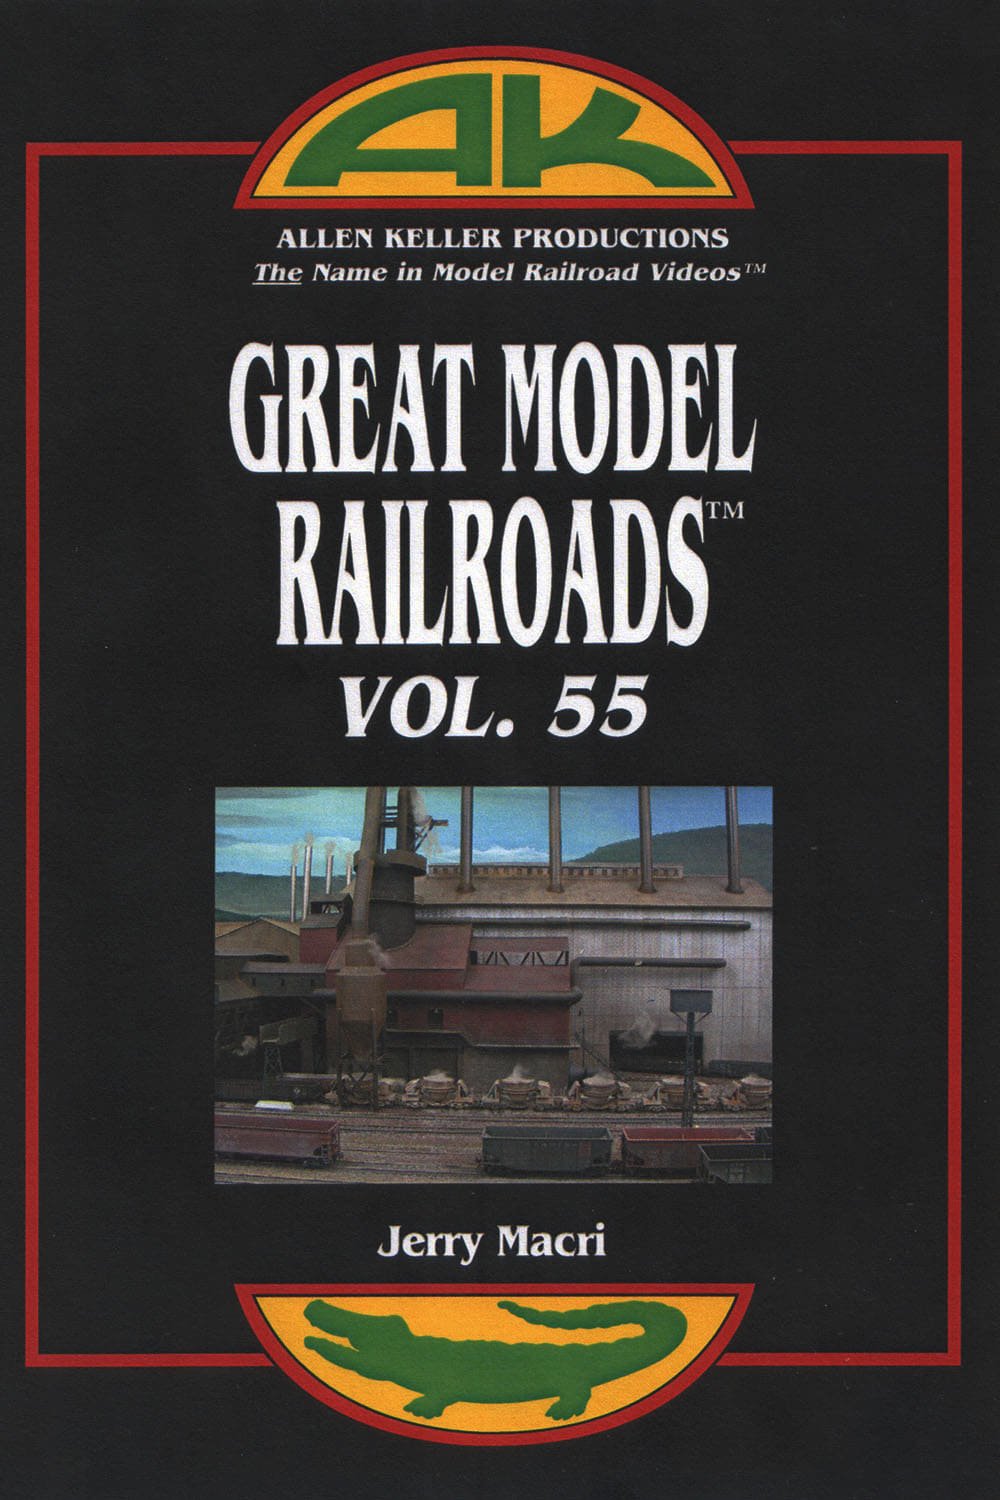 Great Model Railroads Vol. 55